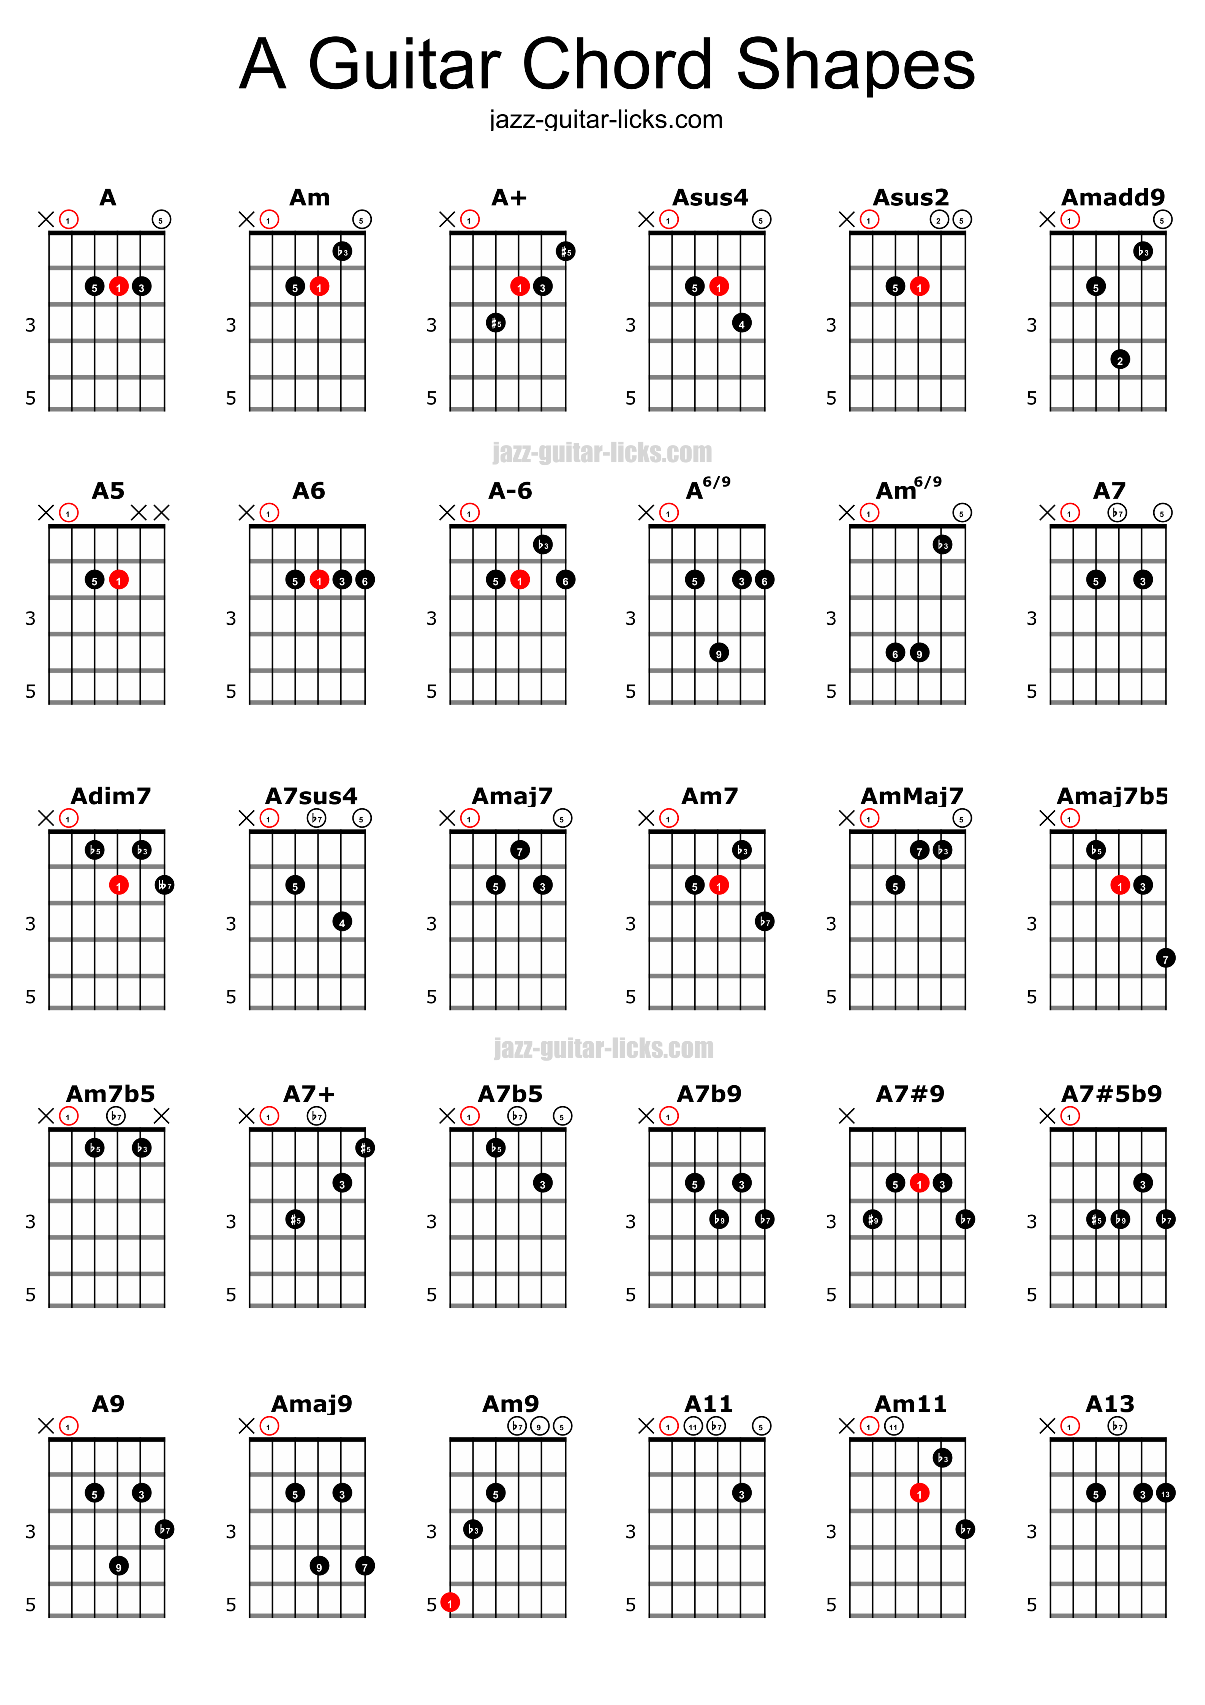 A guitar chord shapes